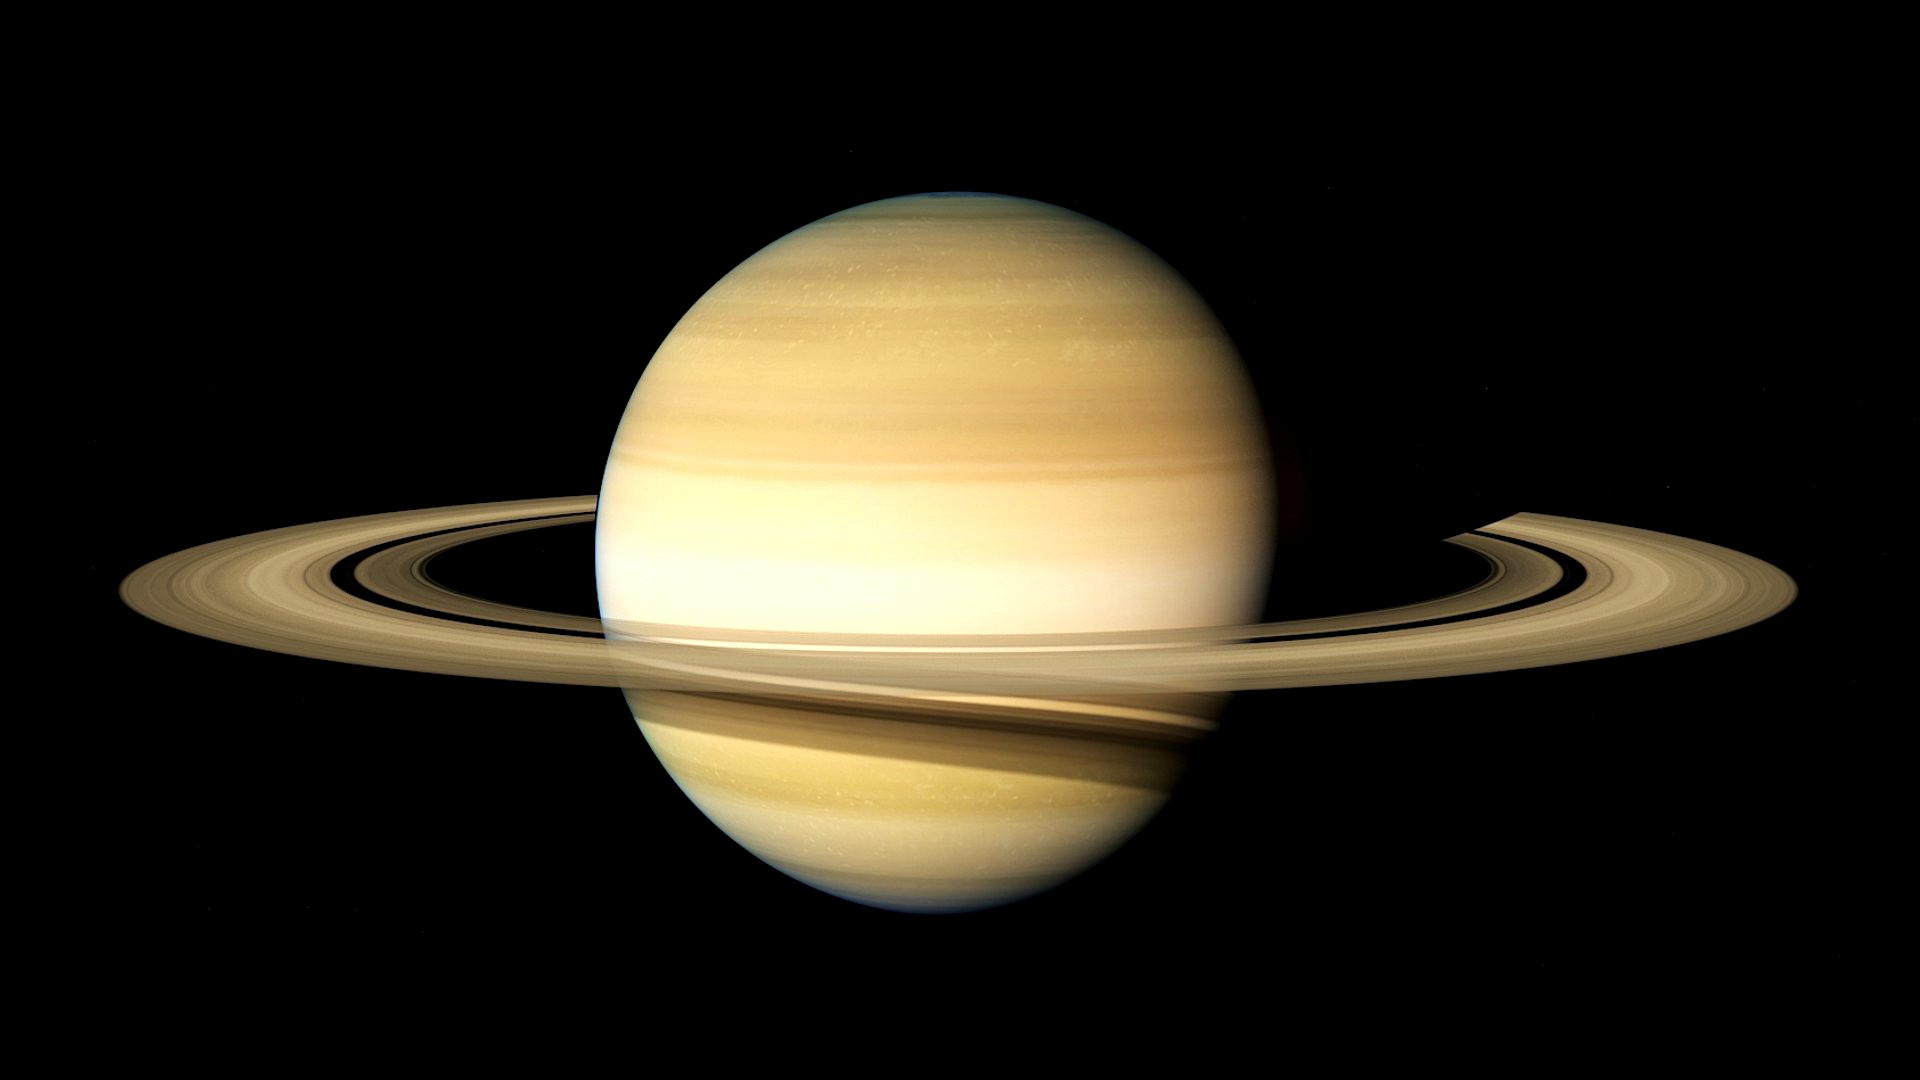 Saturn 8K